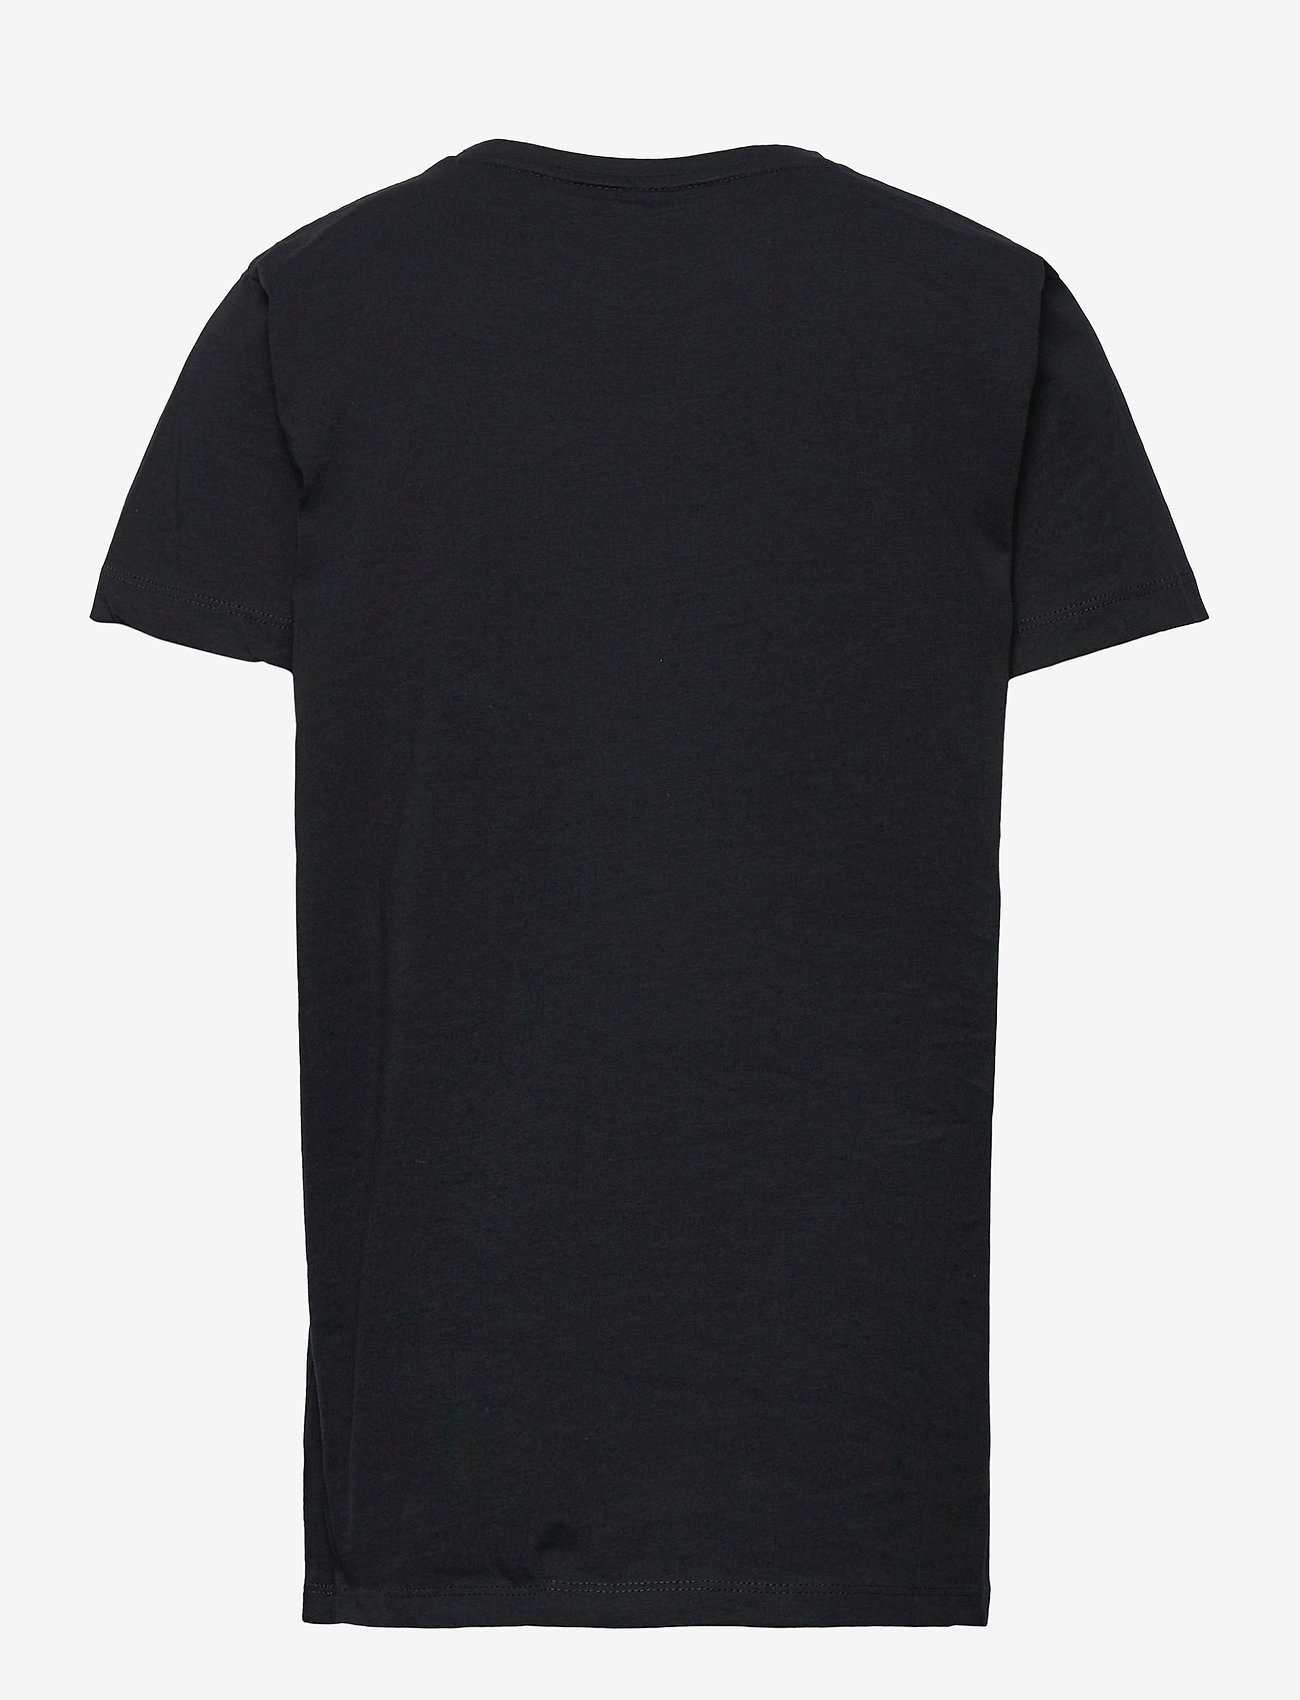 GANT - GANT SHIELD SS T-SHIRT - pattern short-sleeved t-shirt - black - 1